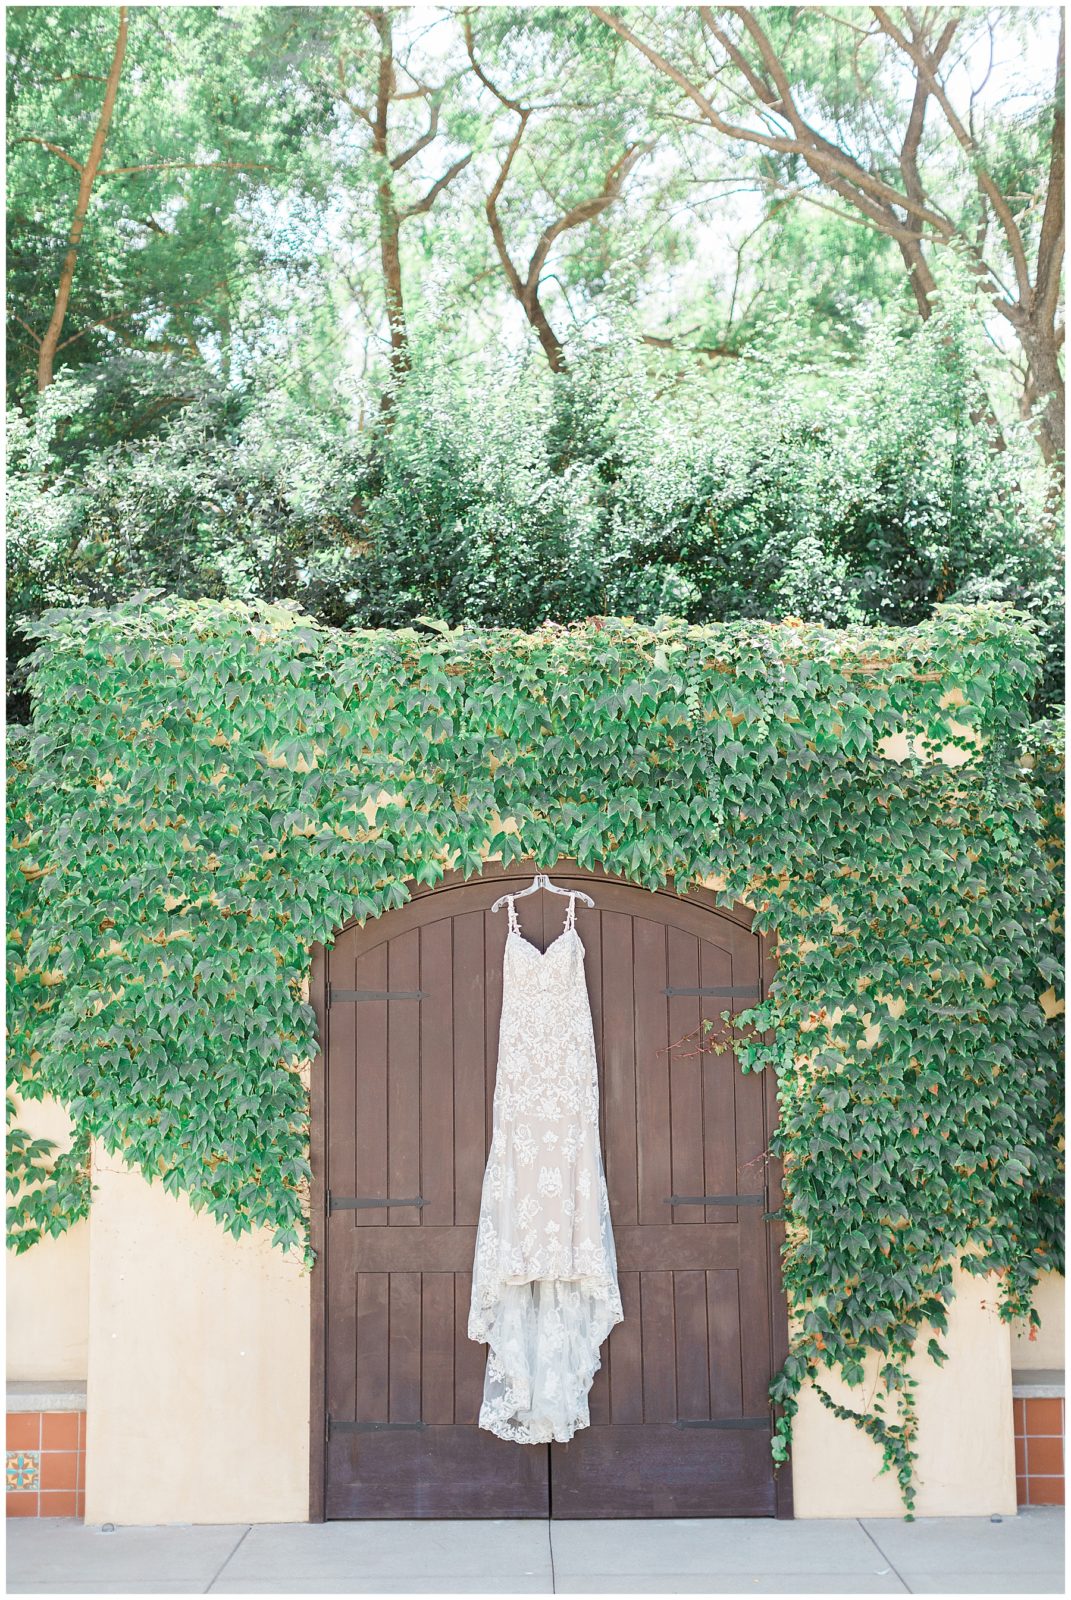 hanging wedding dress outside on greenery